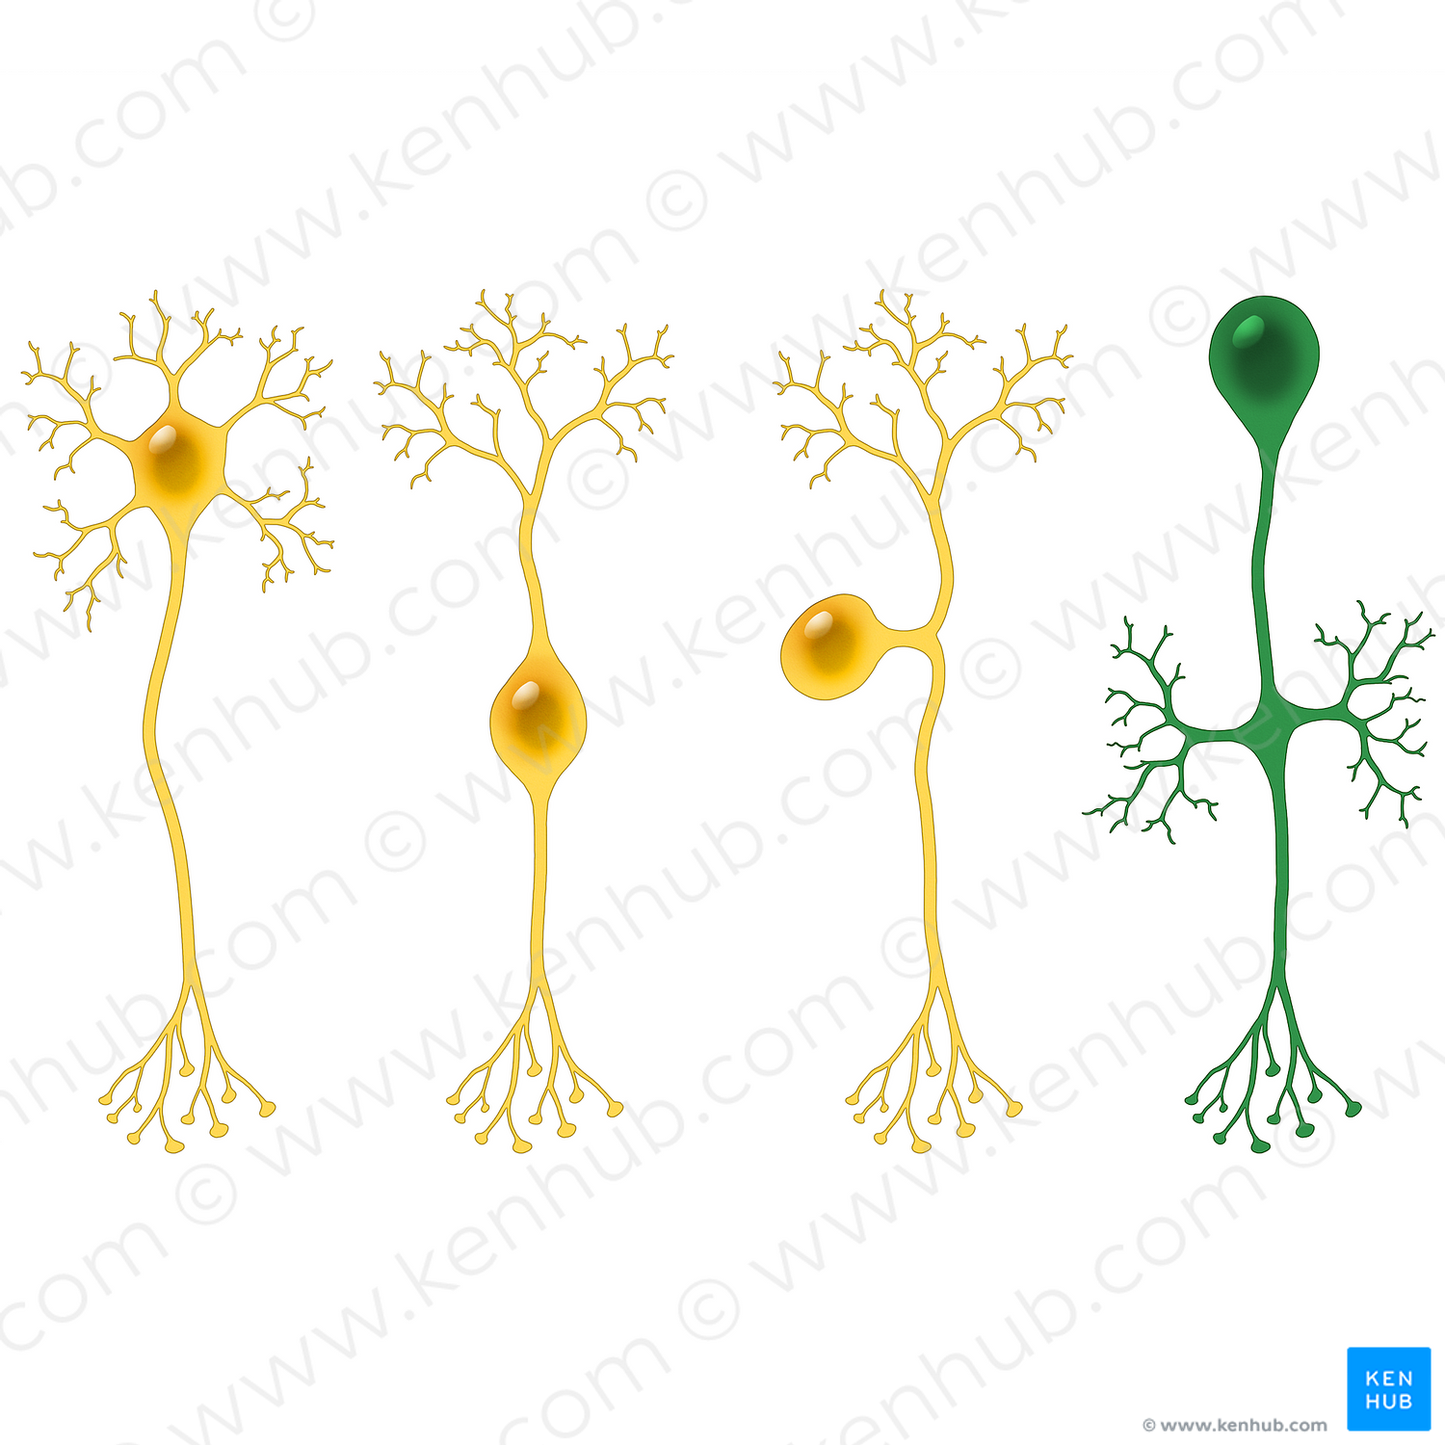 Unipolar neuron (#13512)